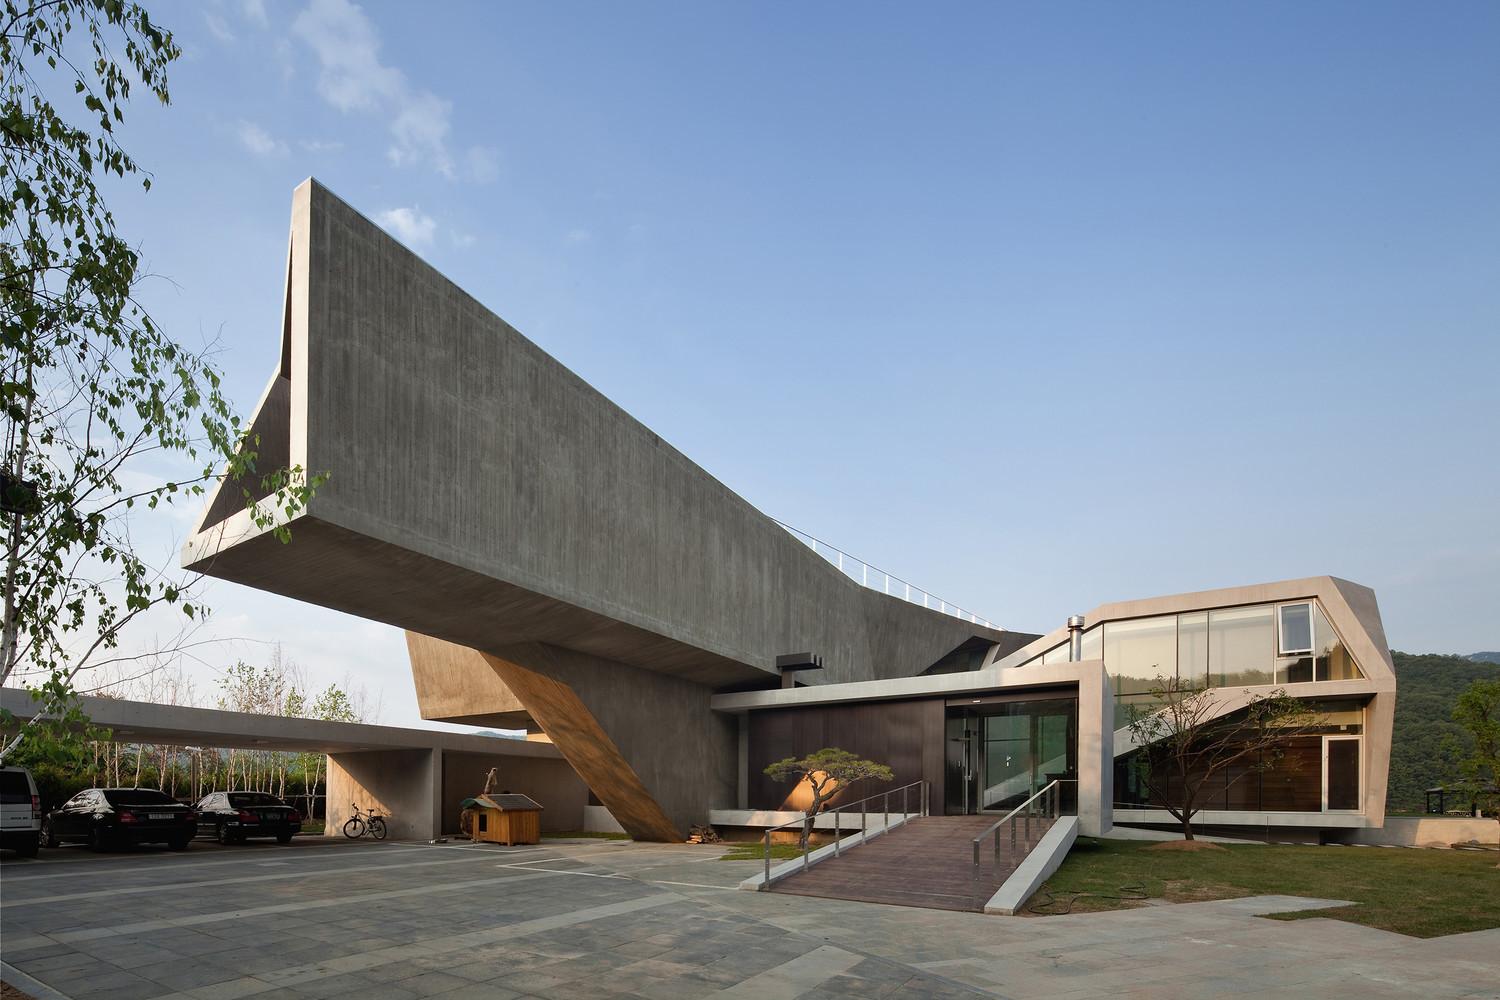 Casa de Huéspedes Rivendell / IDMM Architects